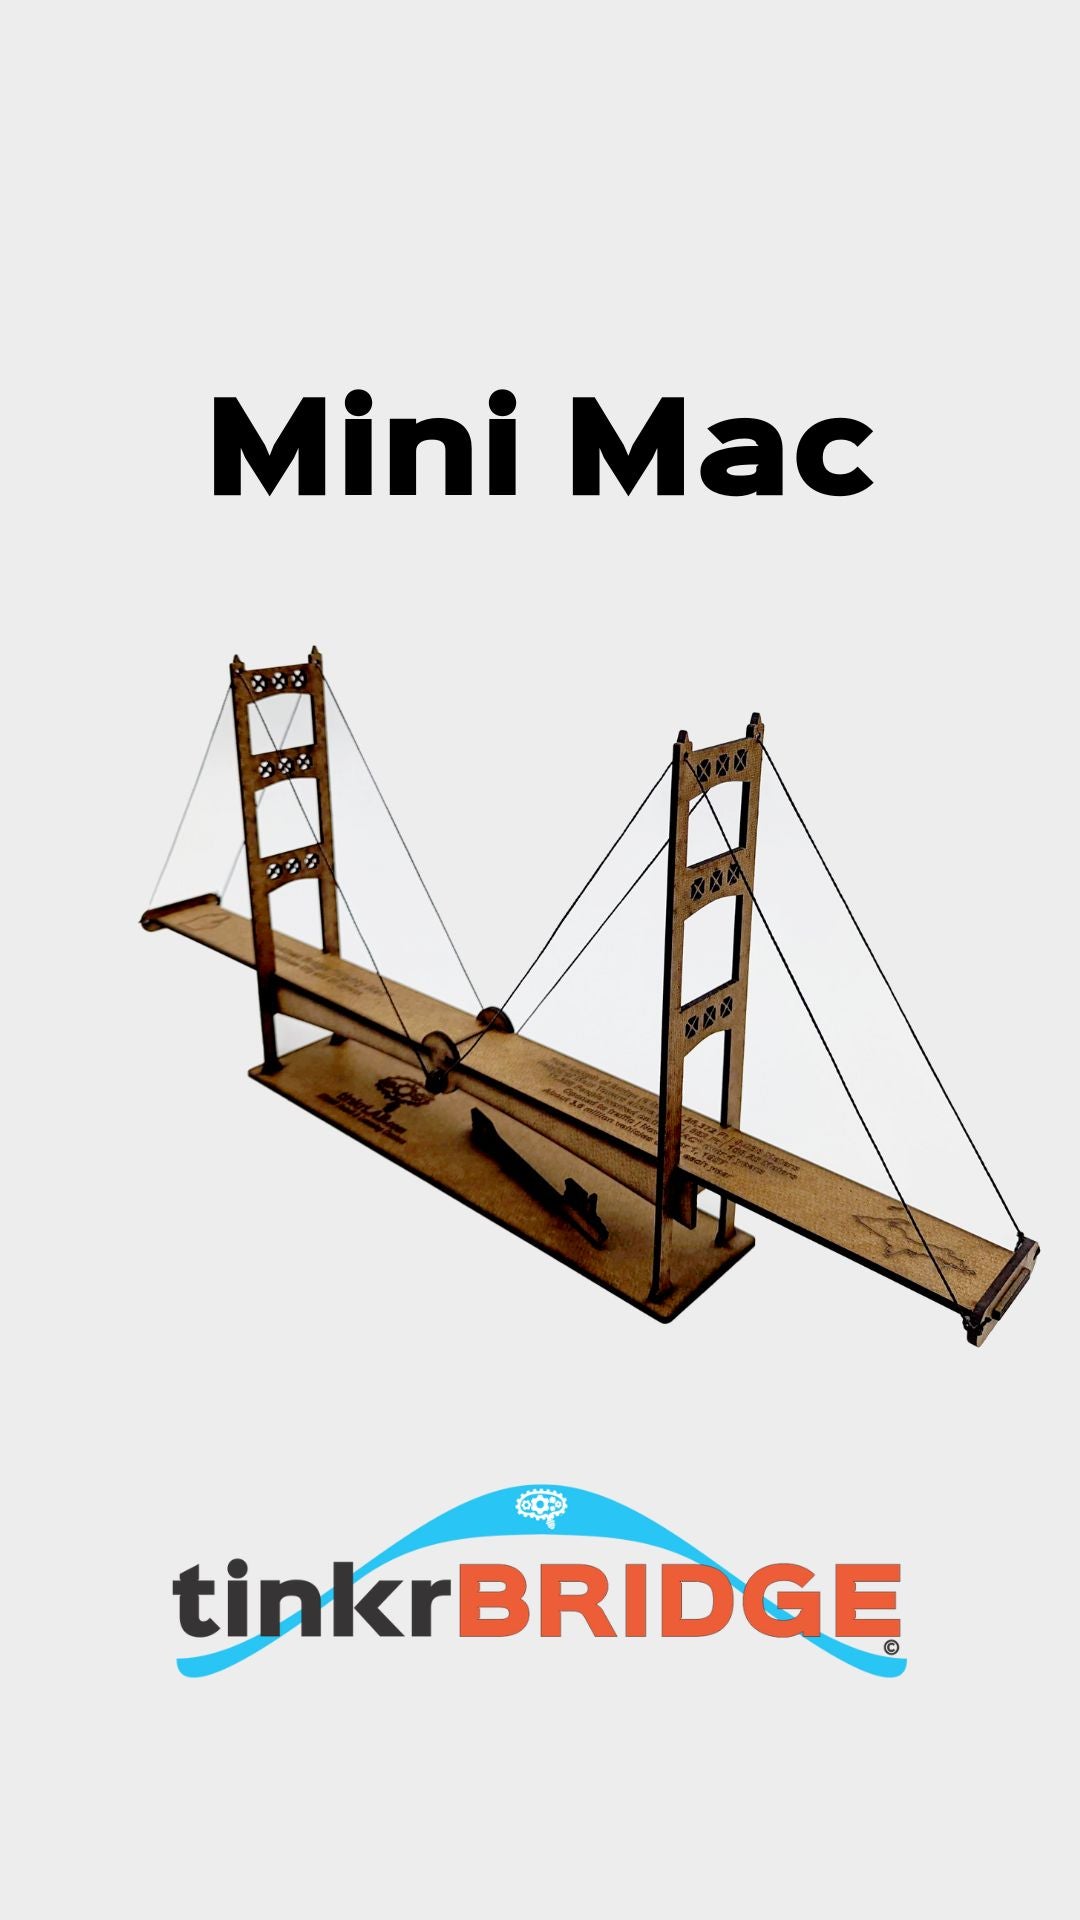 tinkrBRIDGE: The Mini Mac